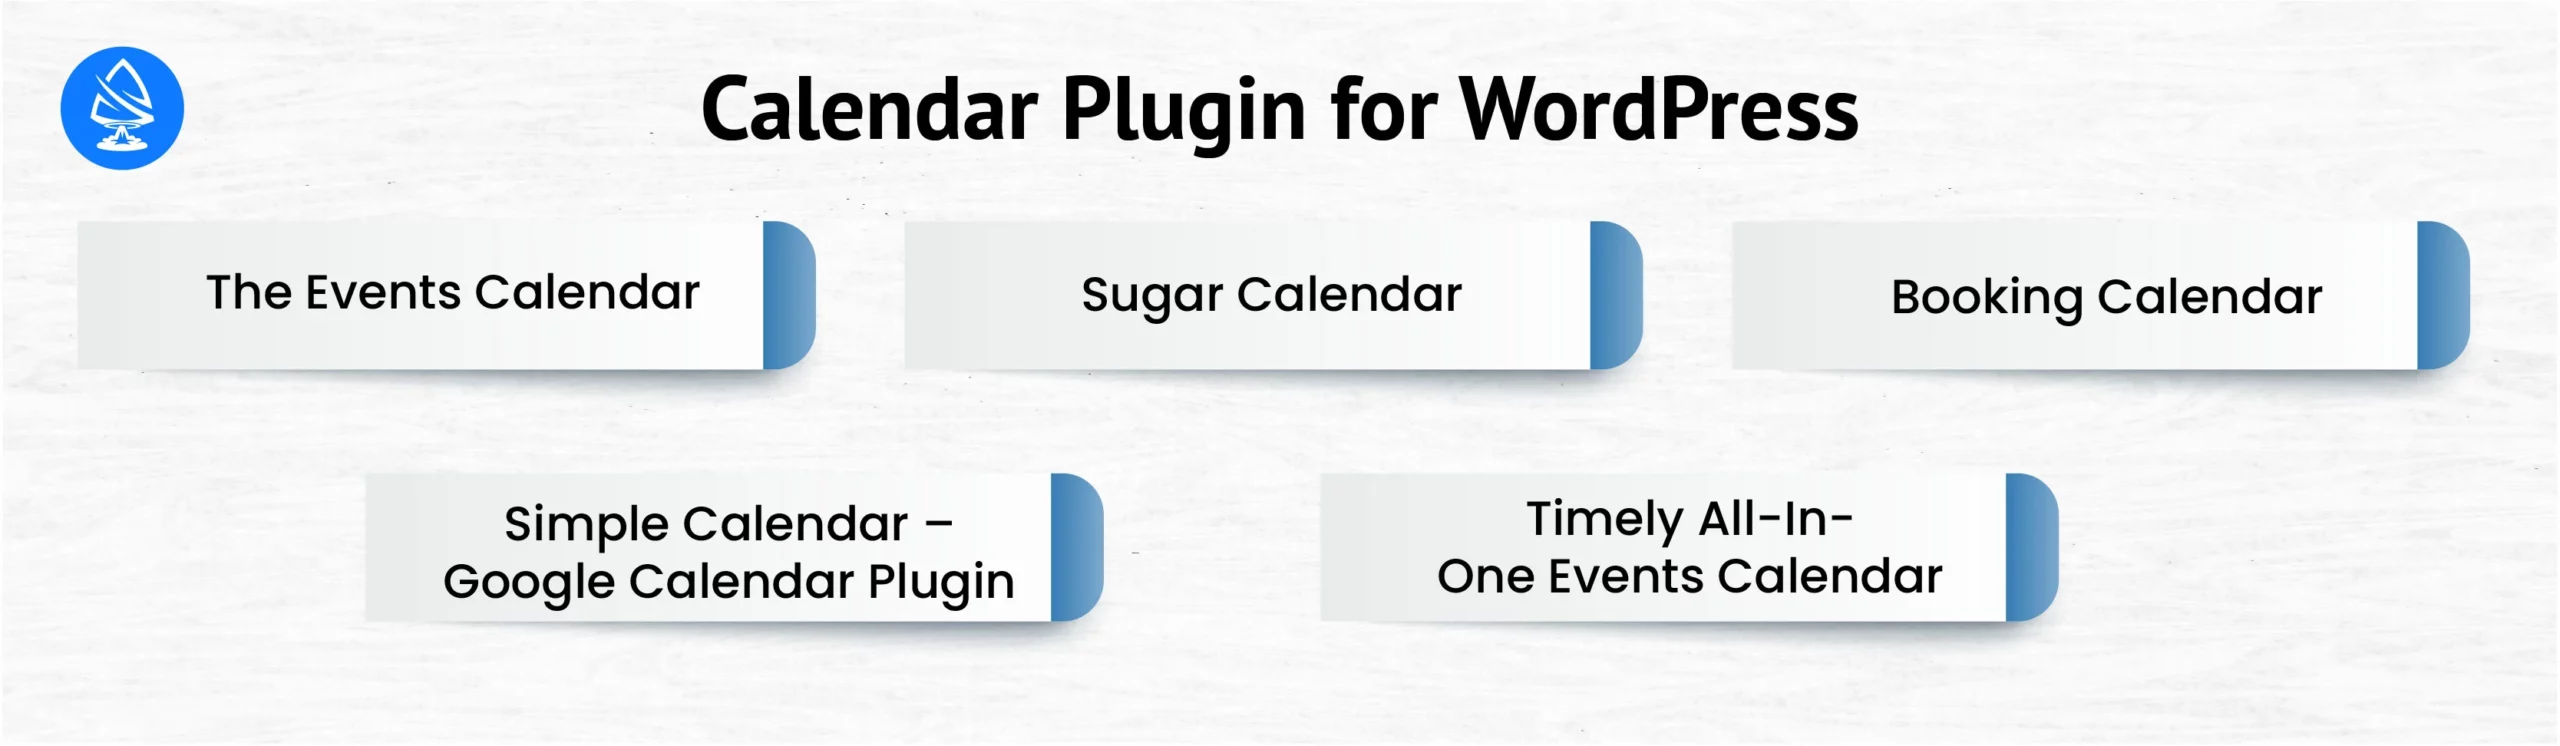 Calendar Plugin for WordPress